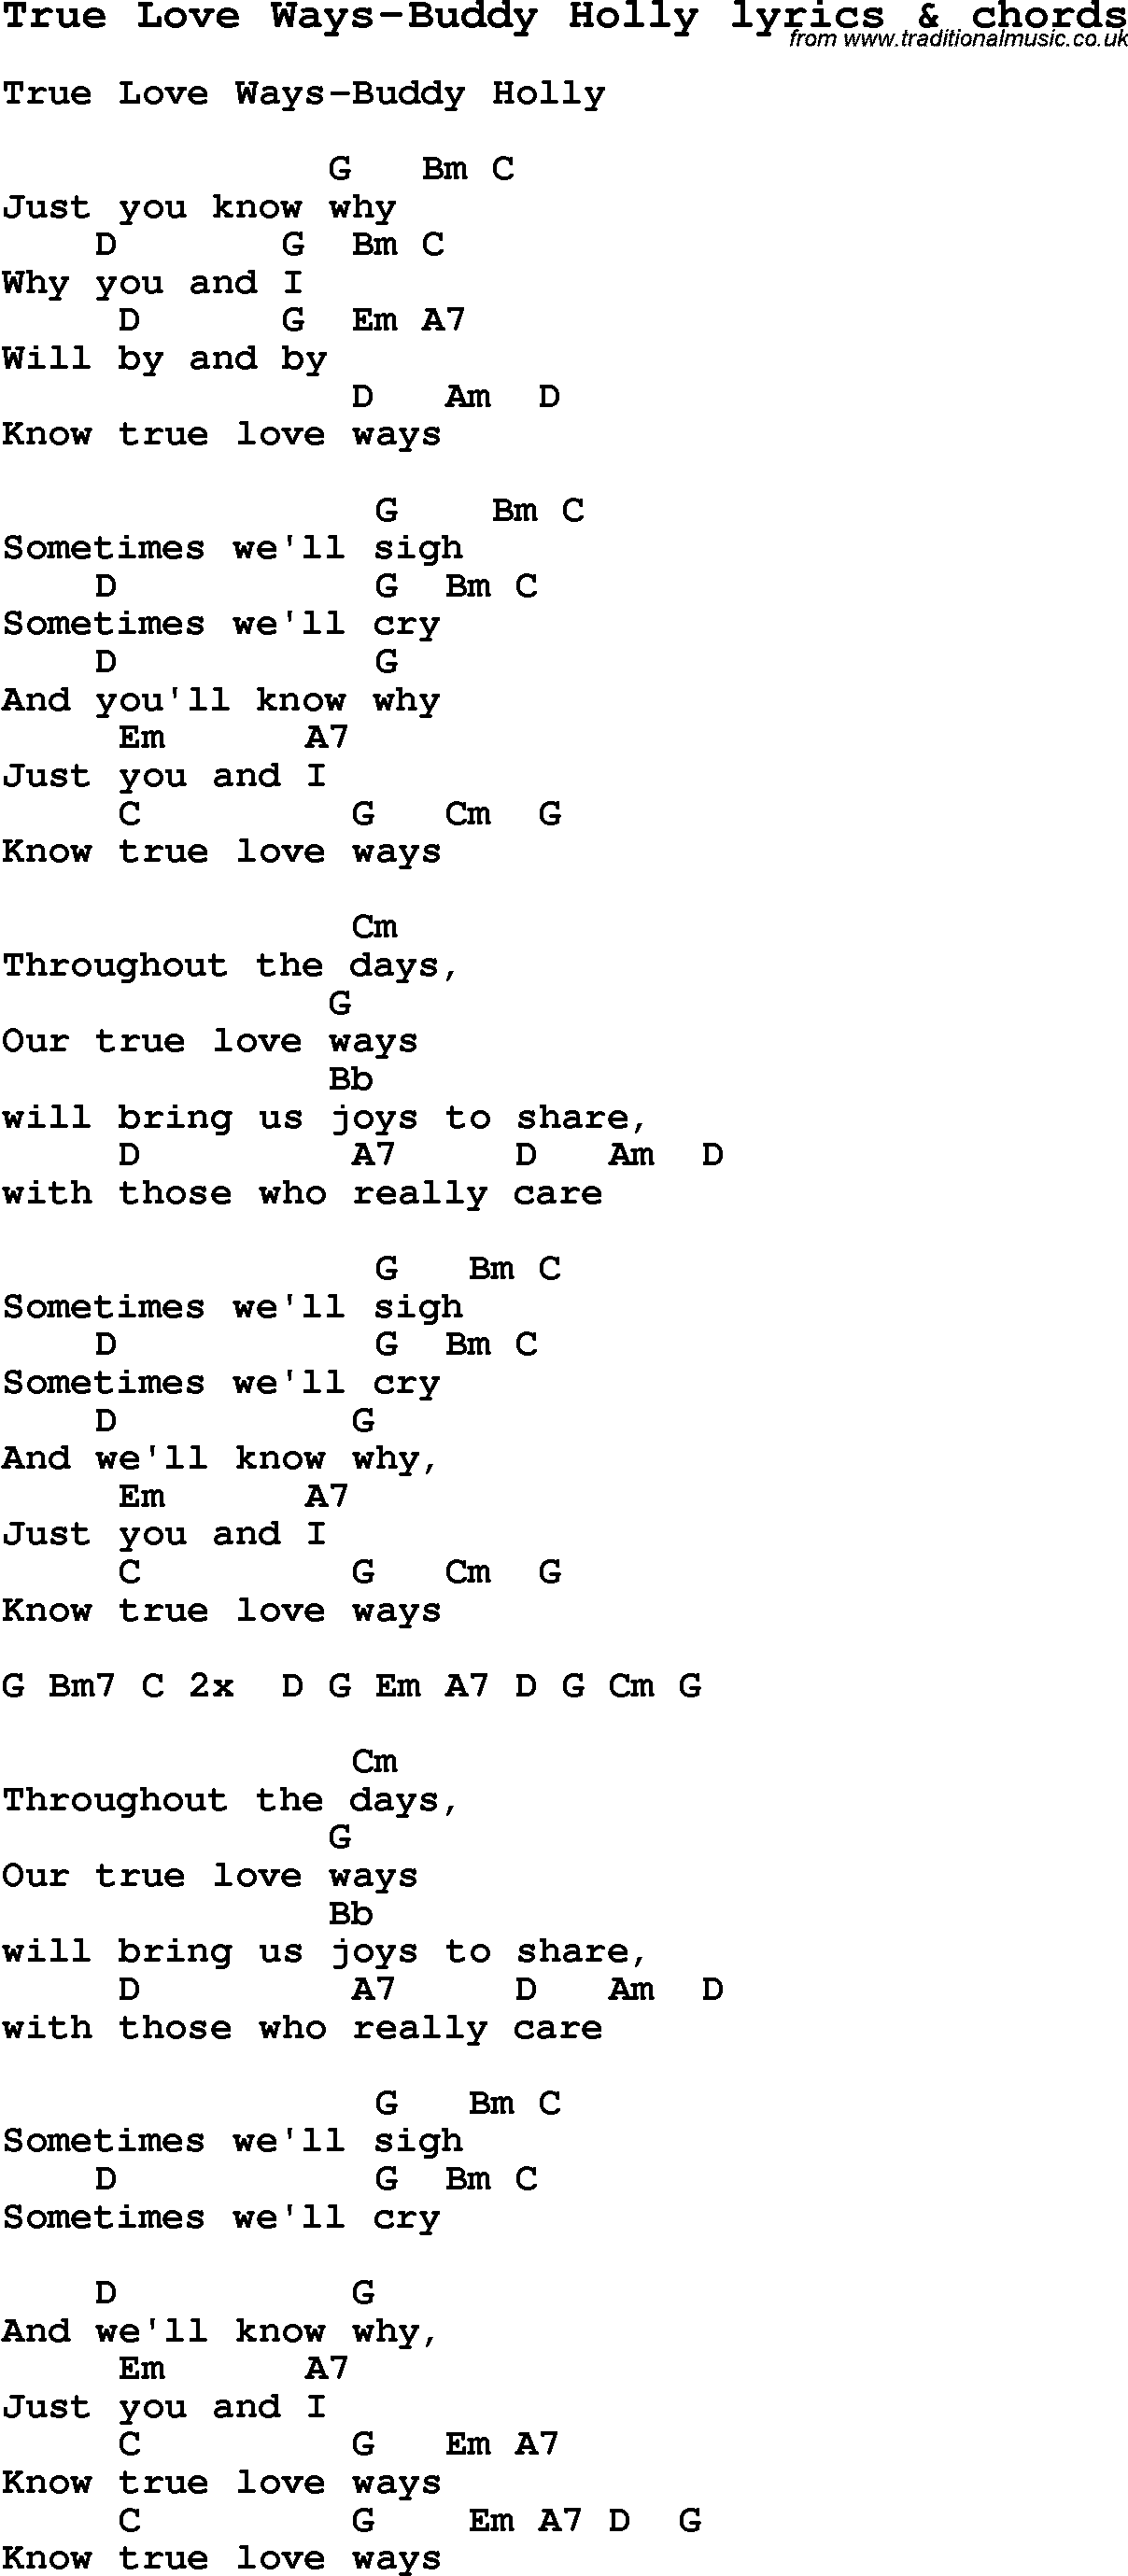 Love Song Lyrics for: True Love Ways-Buddy Holly with chords for Ukulele, Guitar Banjo etc.